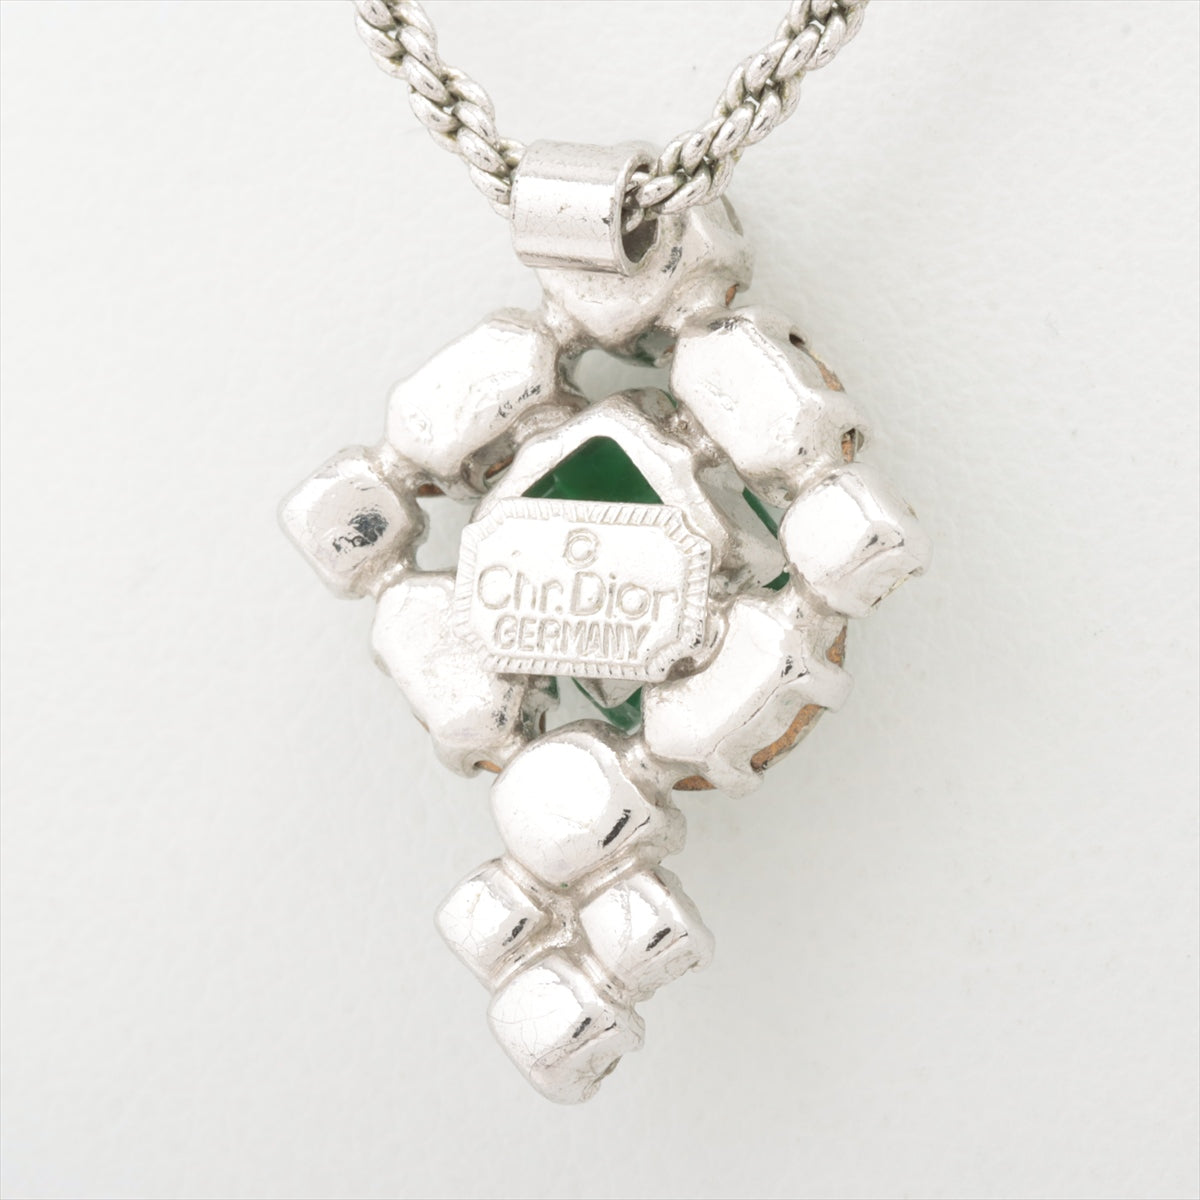 Christian Dior Necklace Metal x rhinestone Silver x green  Color stone